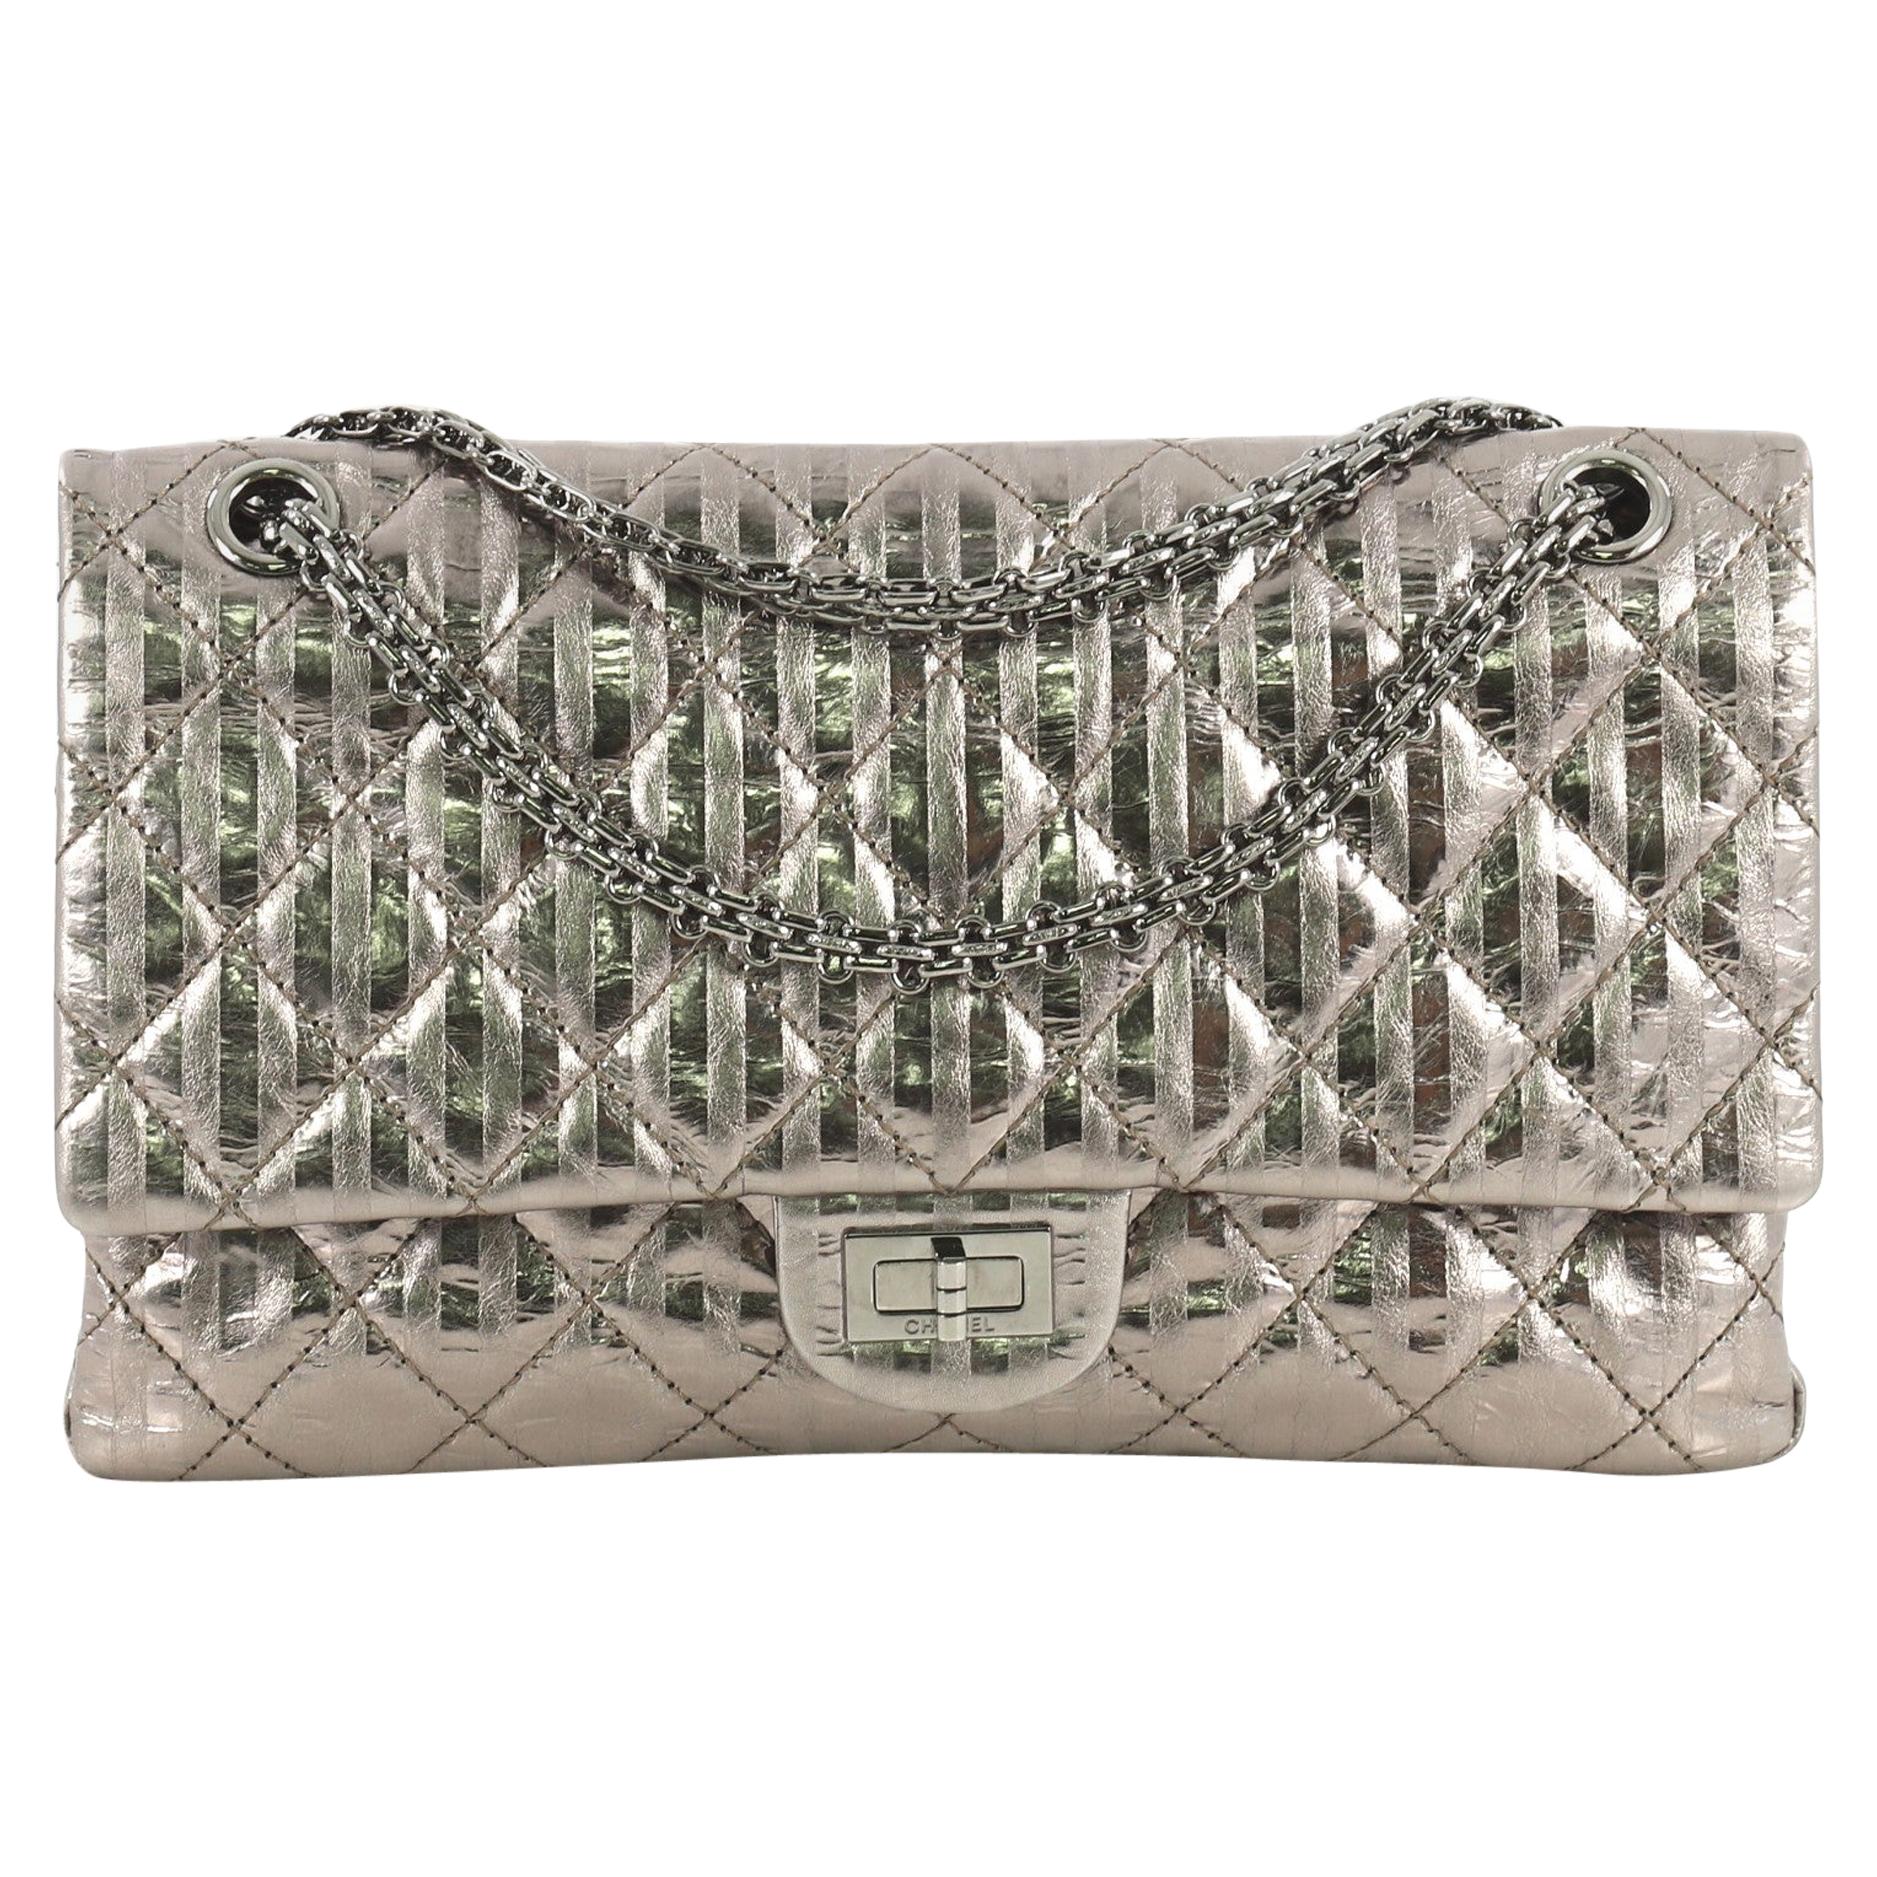 Chanel Rayures Reissue 2.55 Handbag Quilted Calfskin 225